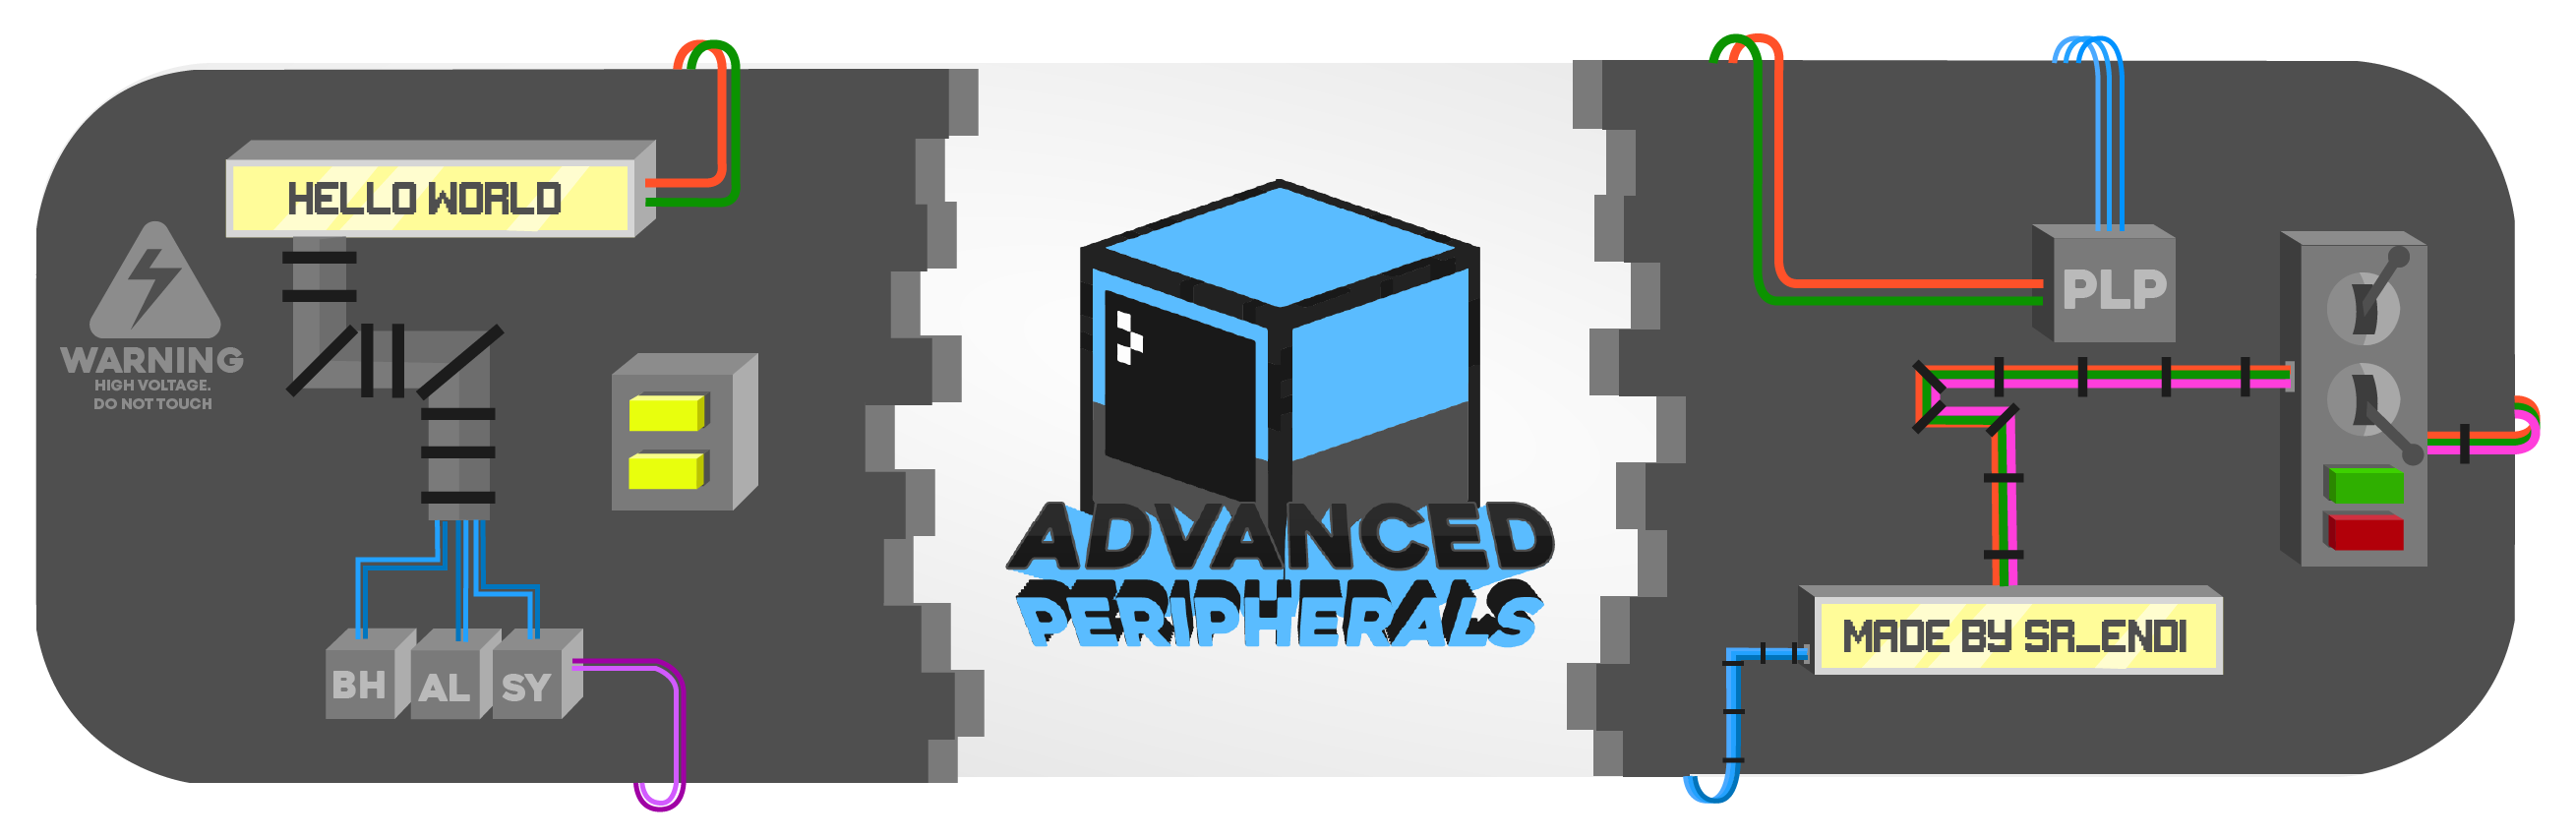 Advanced Peripherals screenshot 1